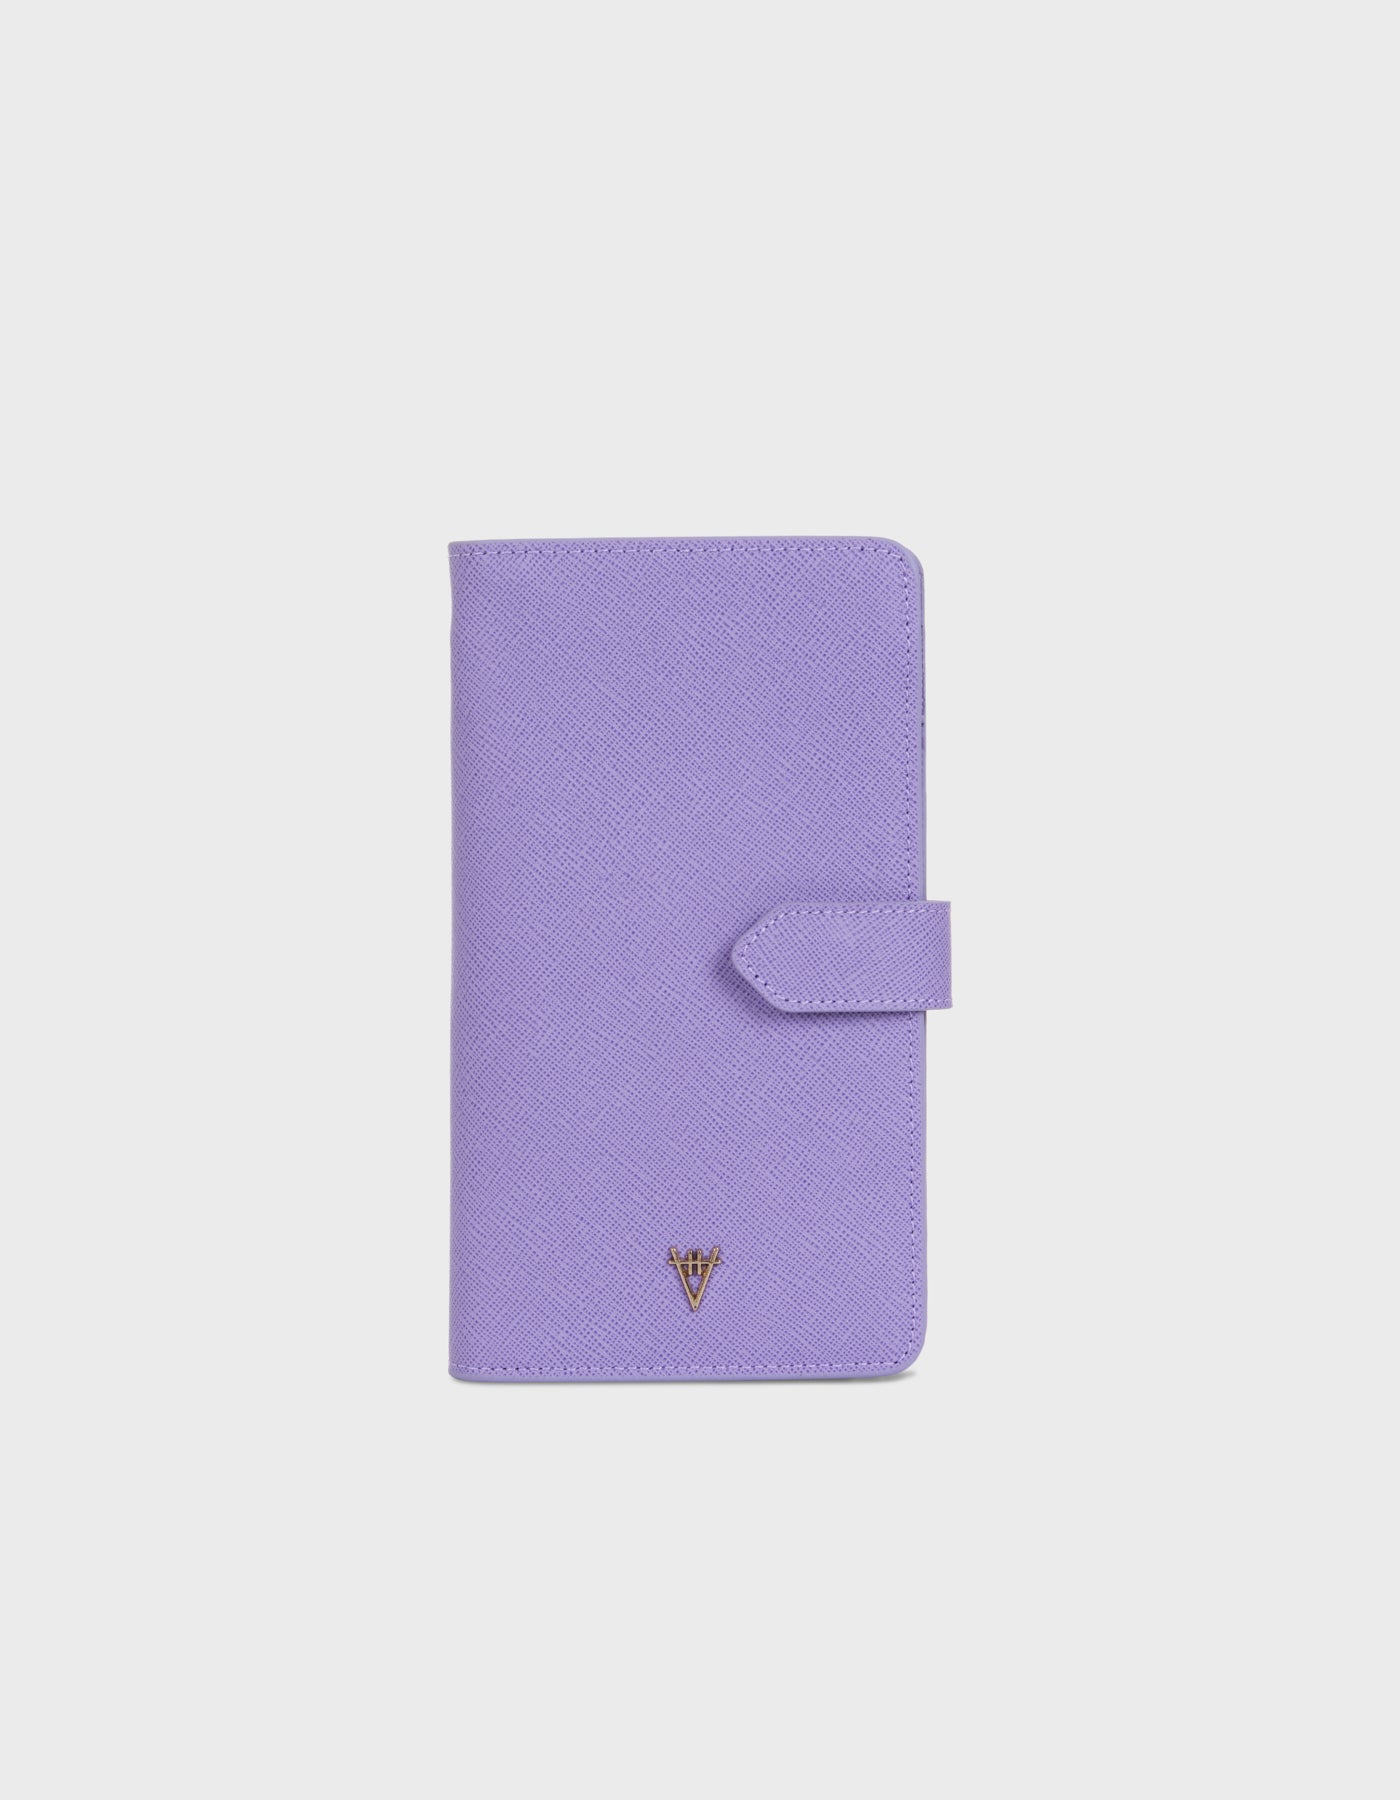 HiVa Atelier | Ita Crossbody Bag and Wallet Lavender Silk | Beautiful and Versatile